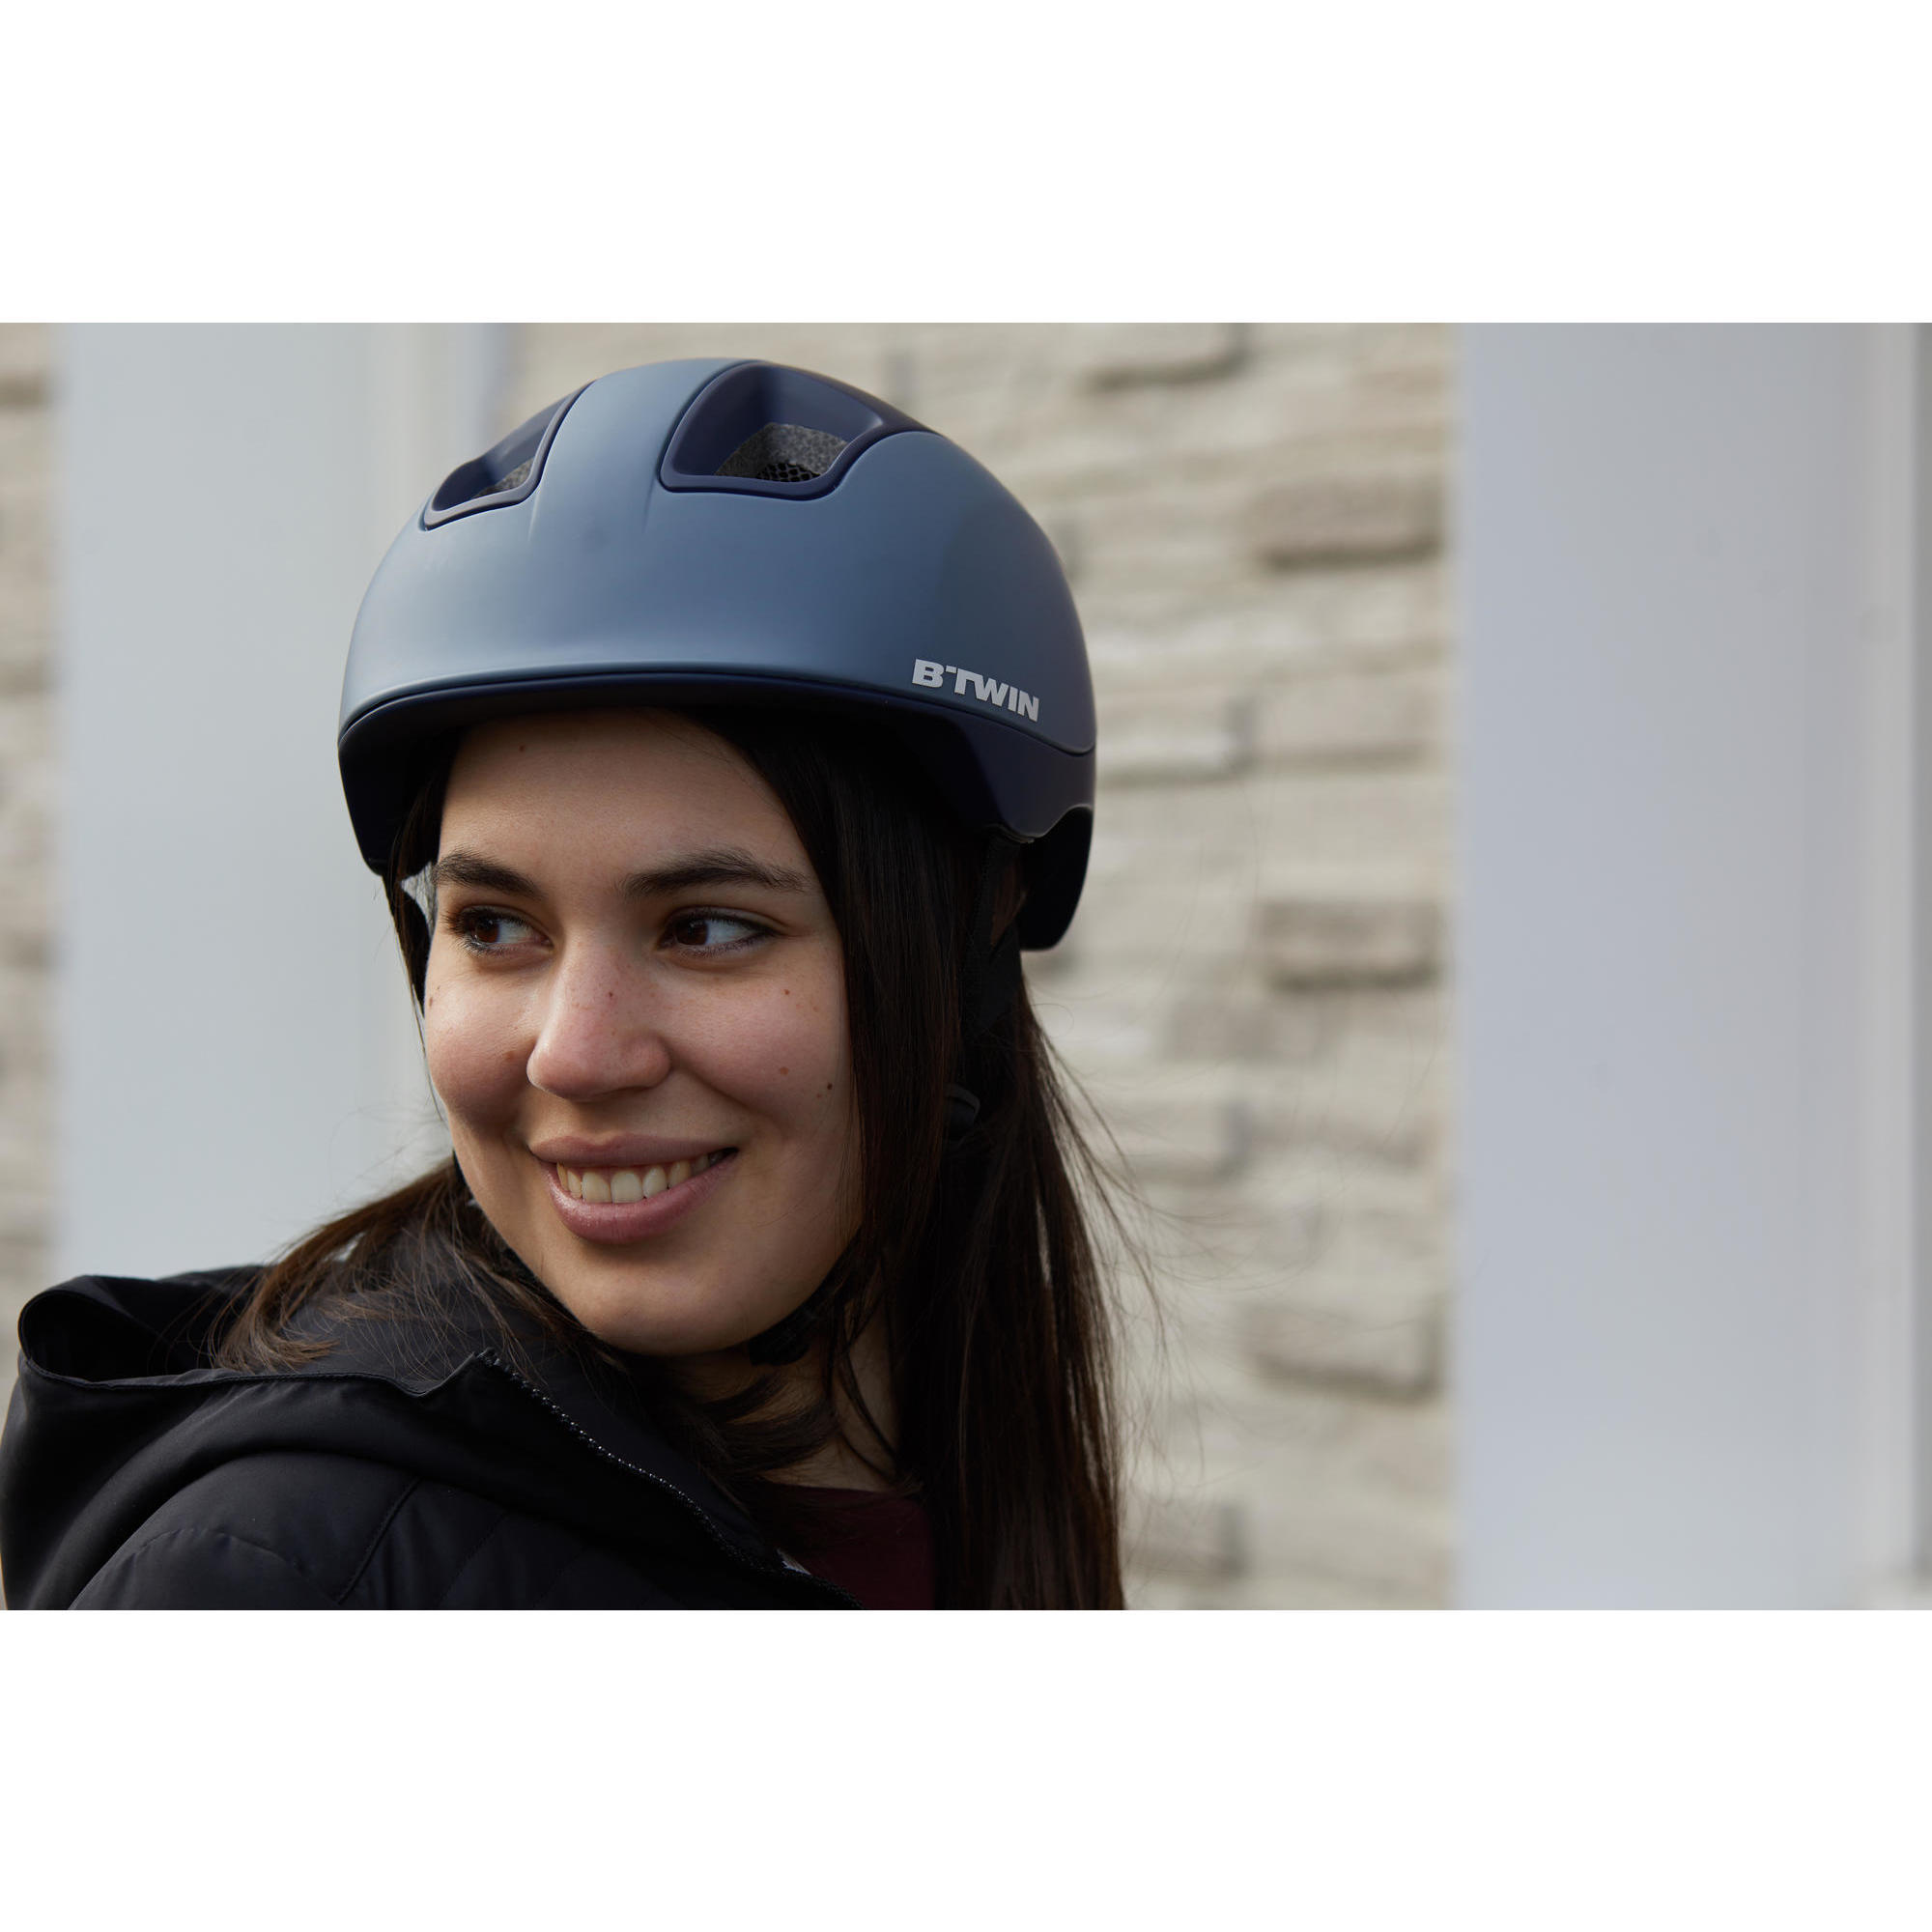 city cycling helmet